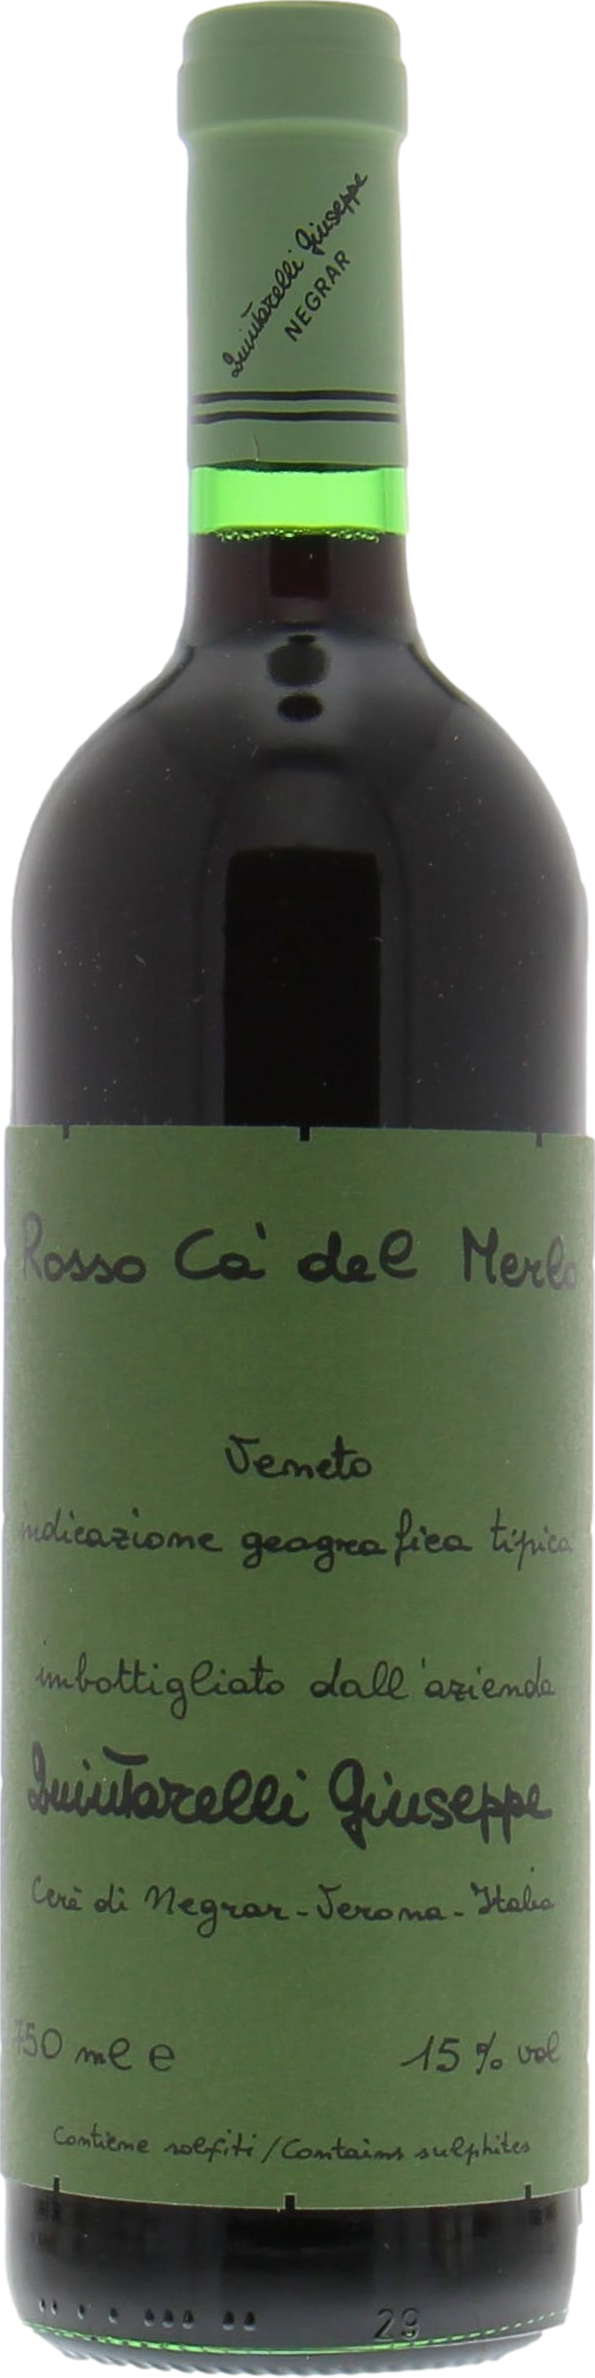 Quintarelli Rosso Ca del Merlo 2014 Červené 15.0% 0.75 l (holá láhev)